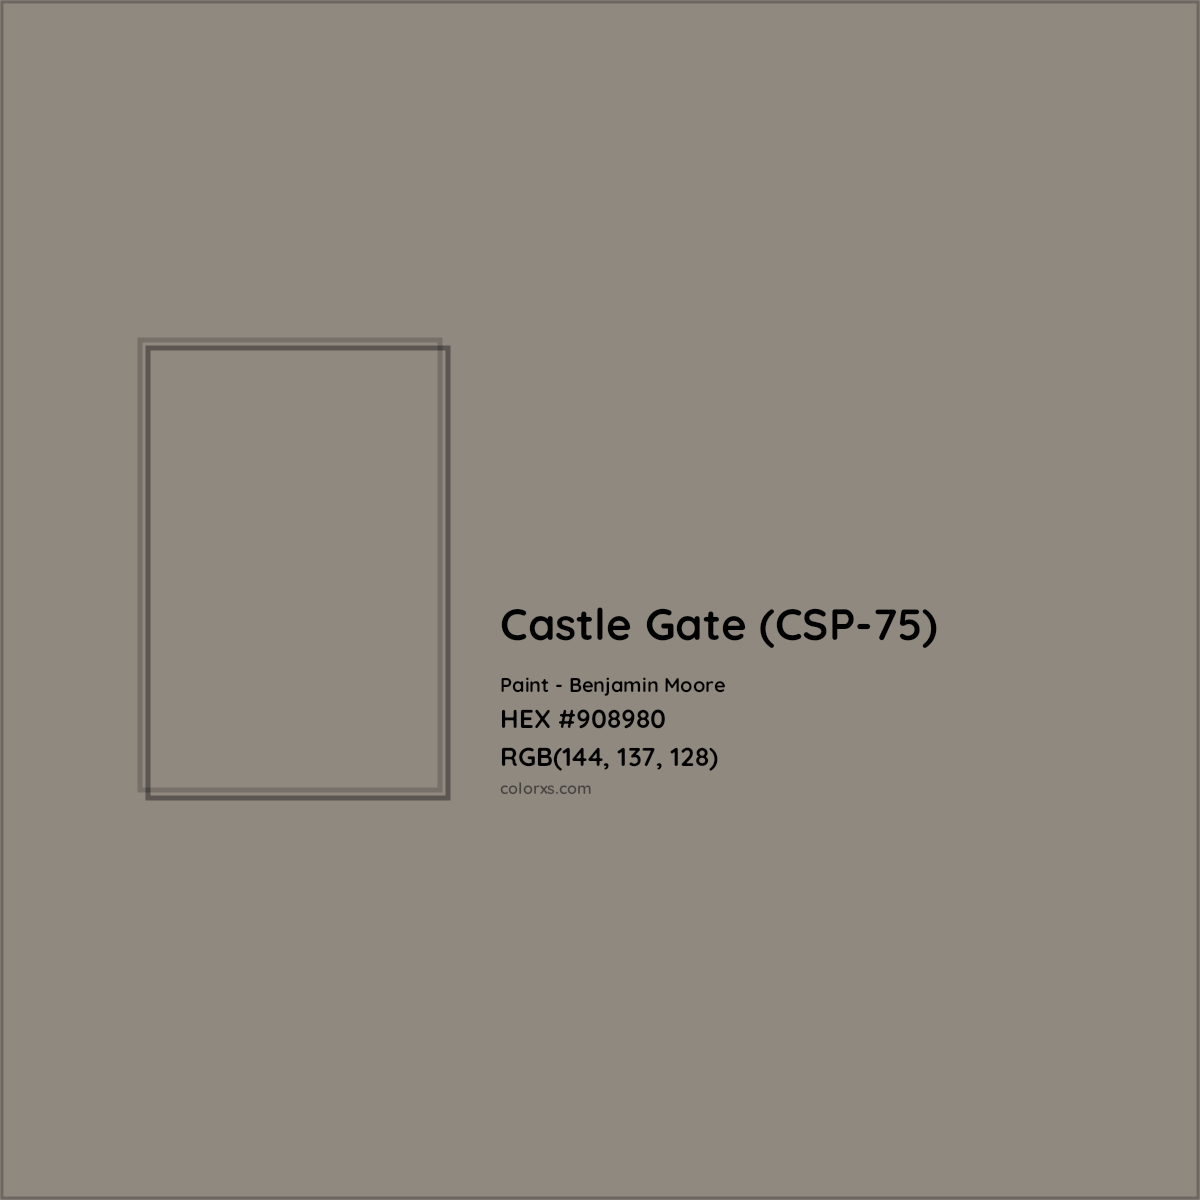 HEX #908980 Castle Gate (CSP-75) Paint Benjamin Moore - Color Code